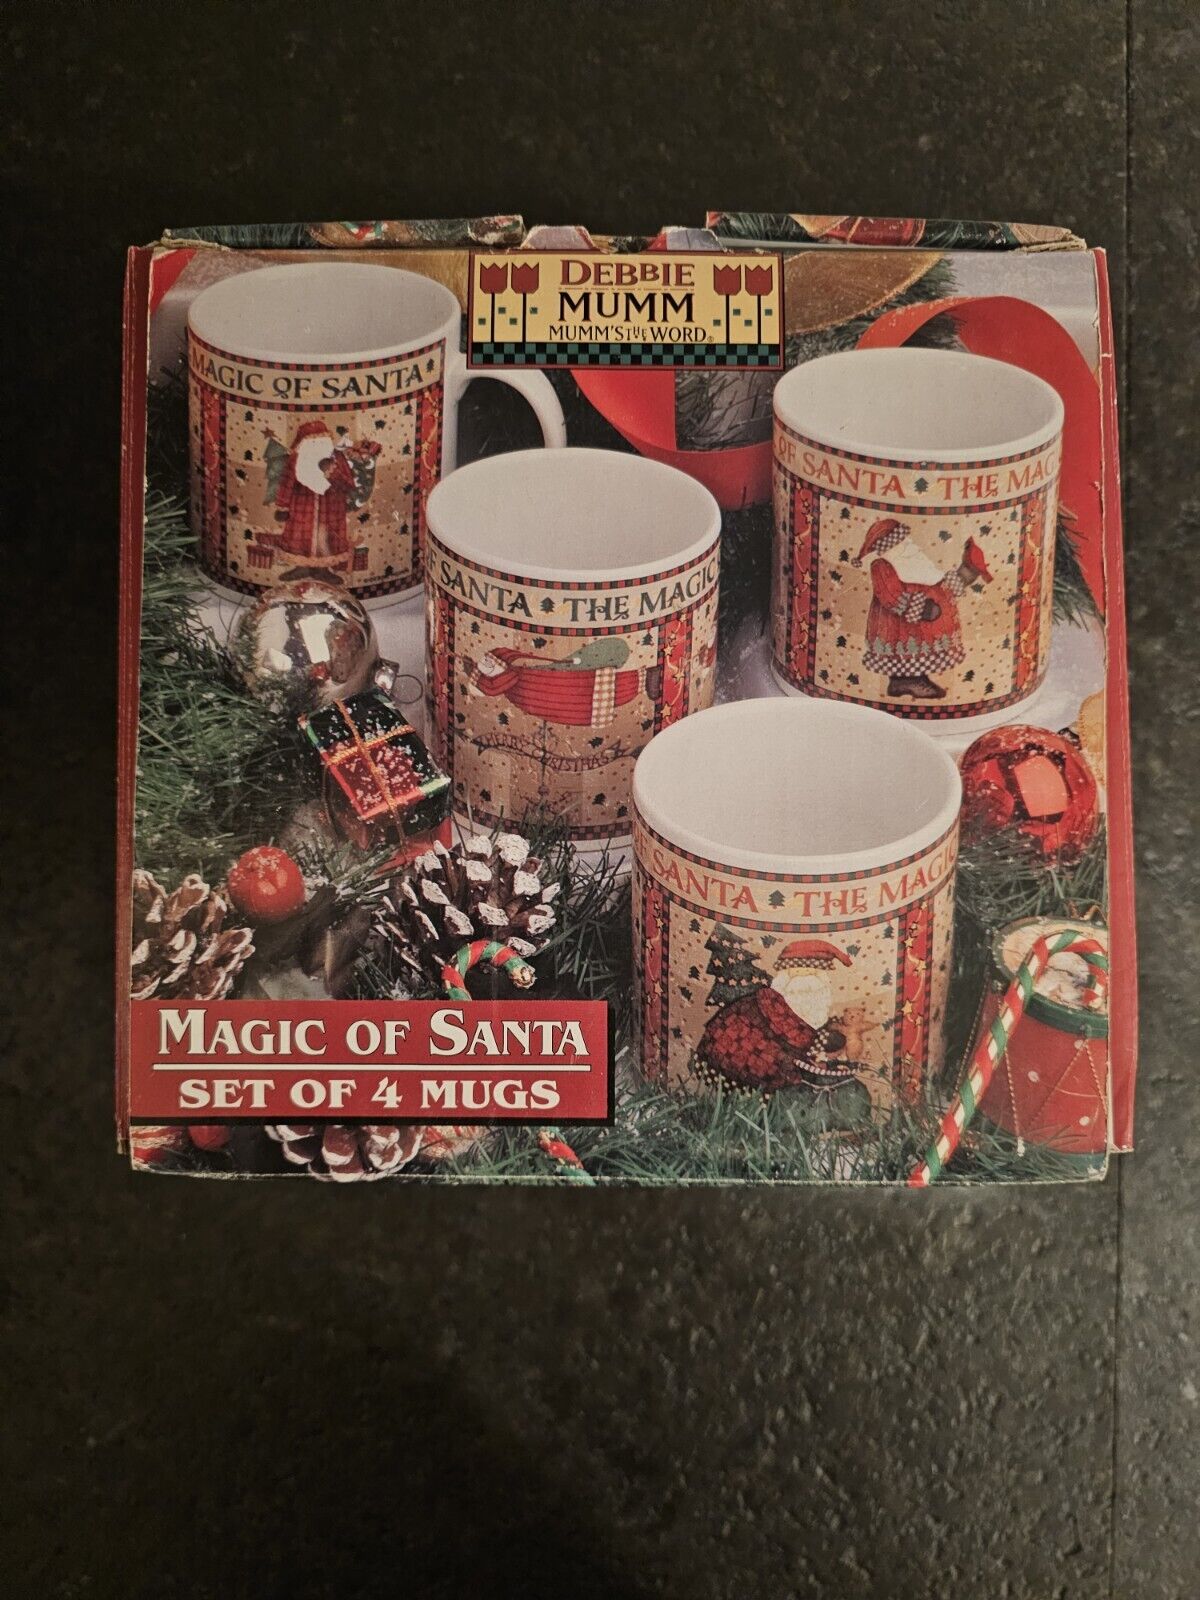 VTG Debbie Mumm Sakura Spirit Of Santa 4 Mugs In Package